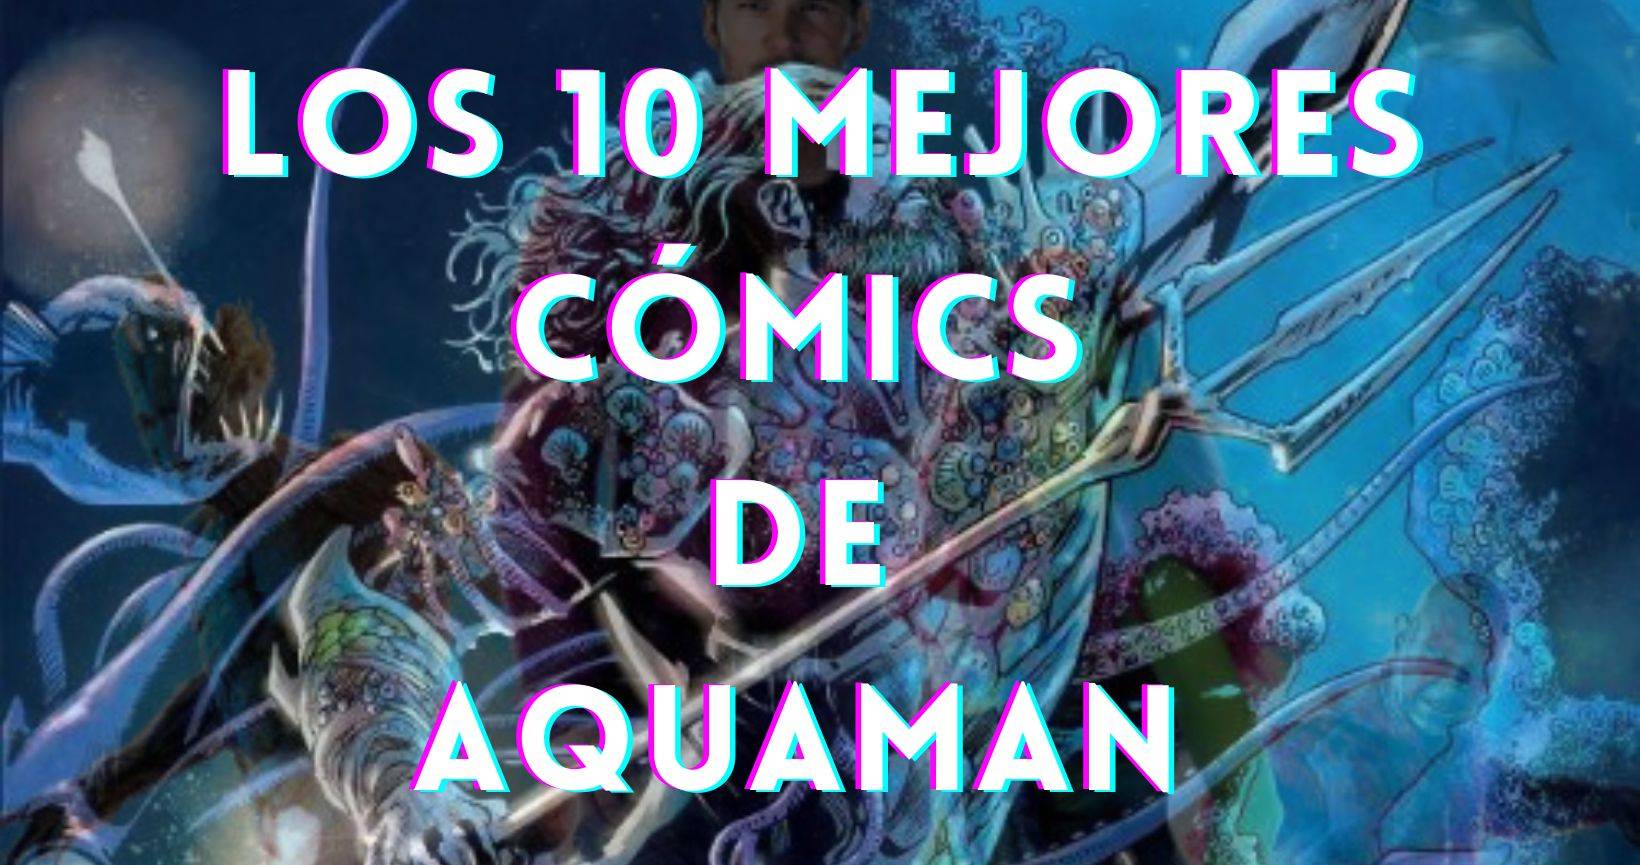 Los 10 mejores cómics de Aquaman, el soberano de Atlantis.